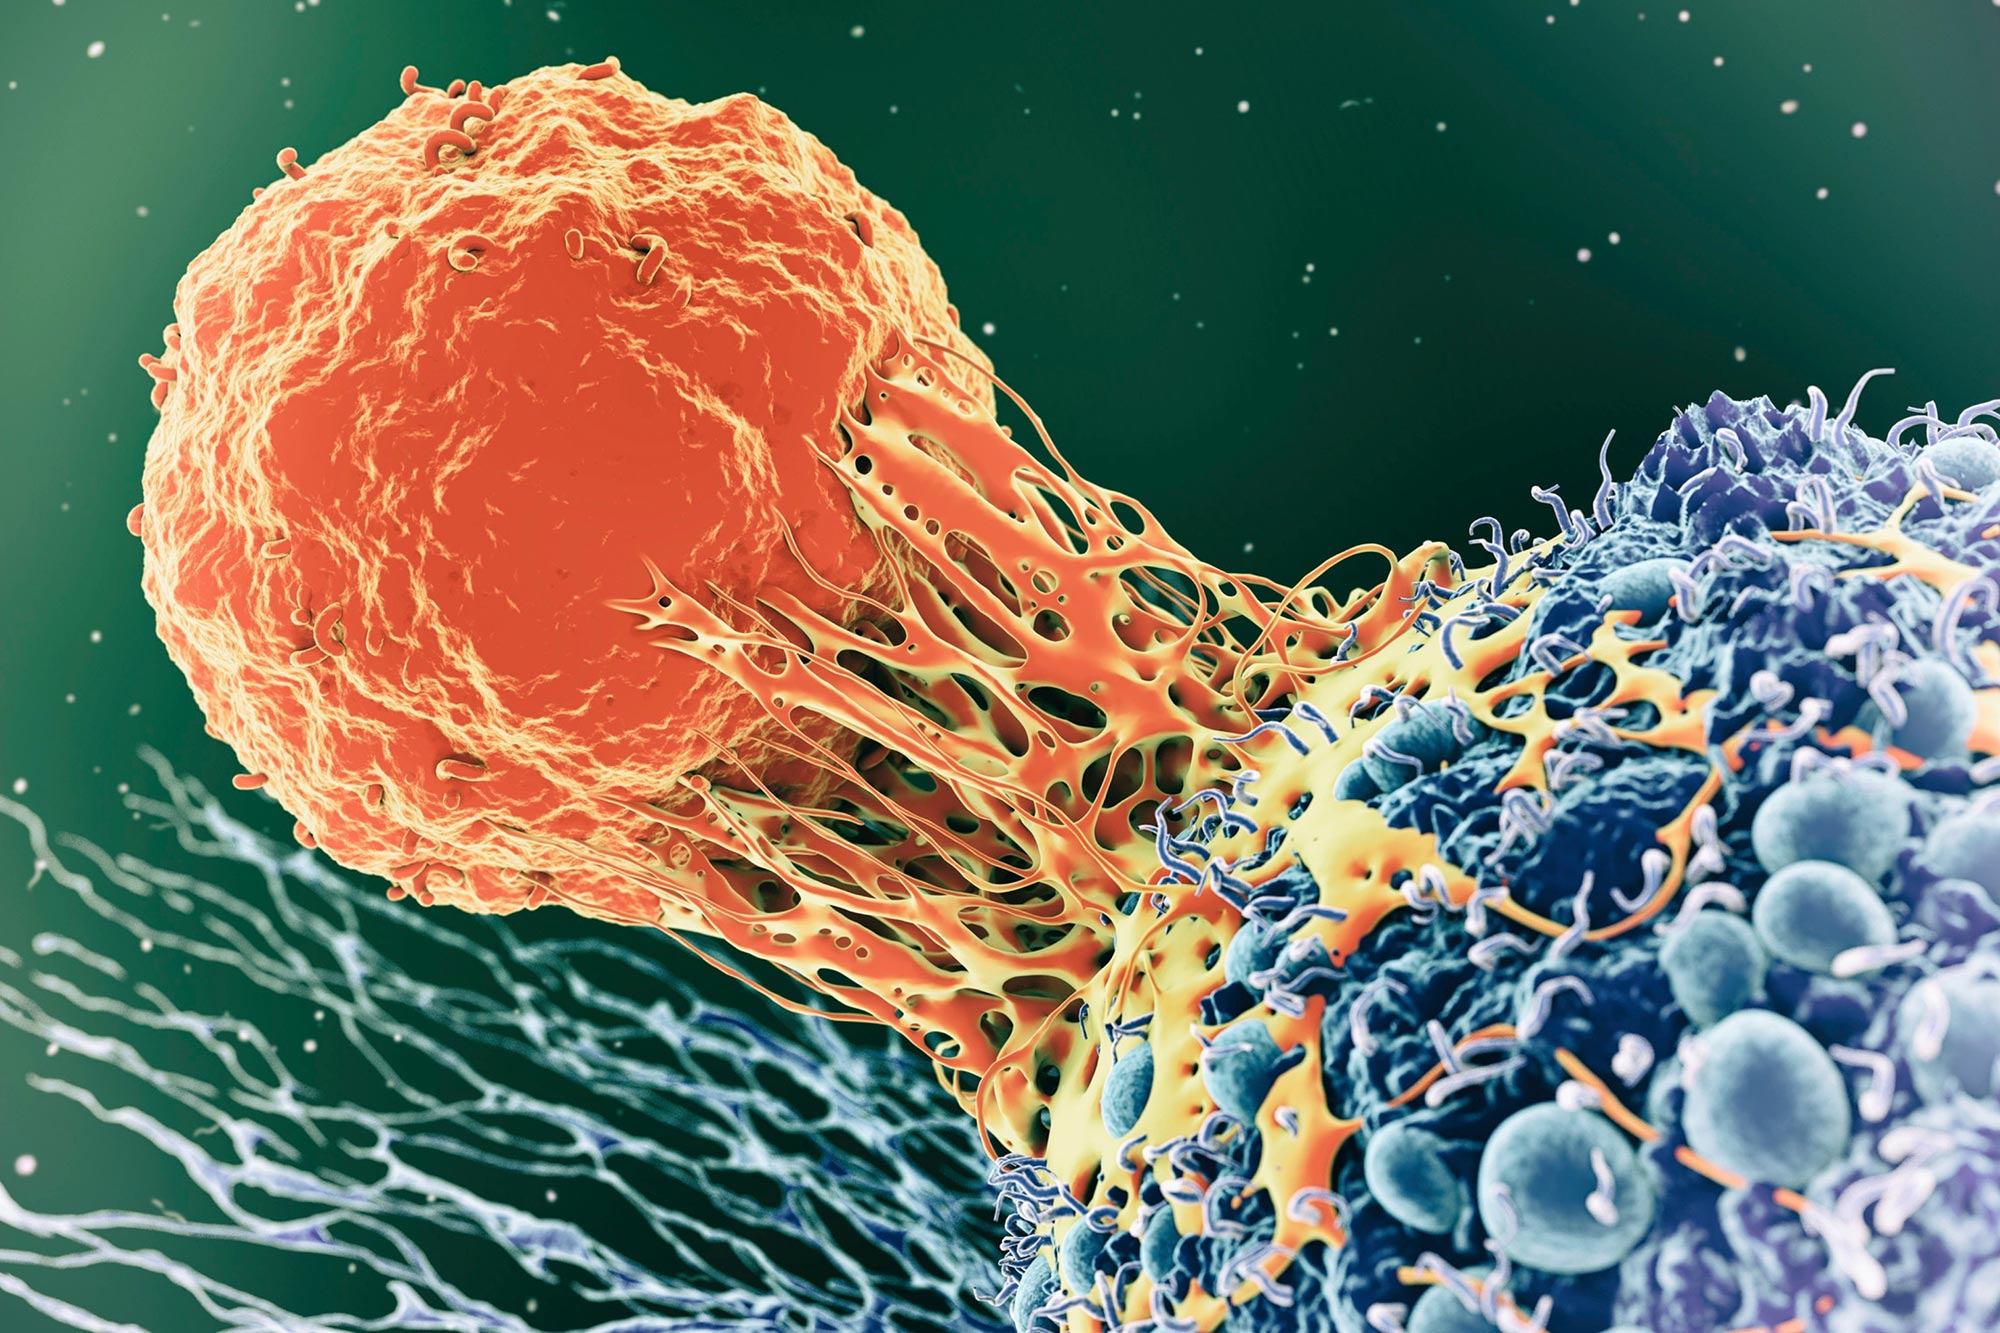 Illustration of immunity against cancer